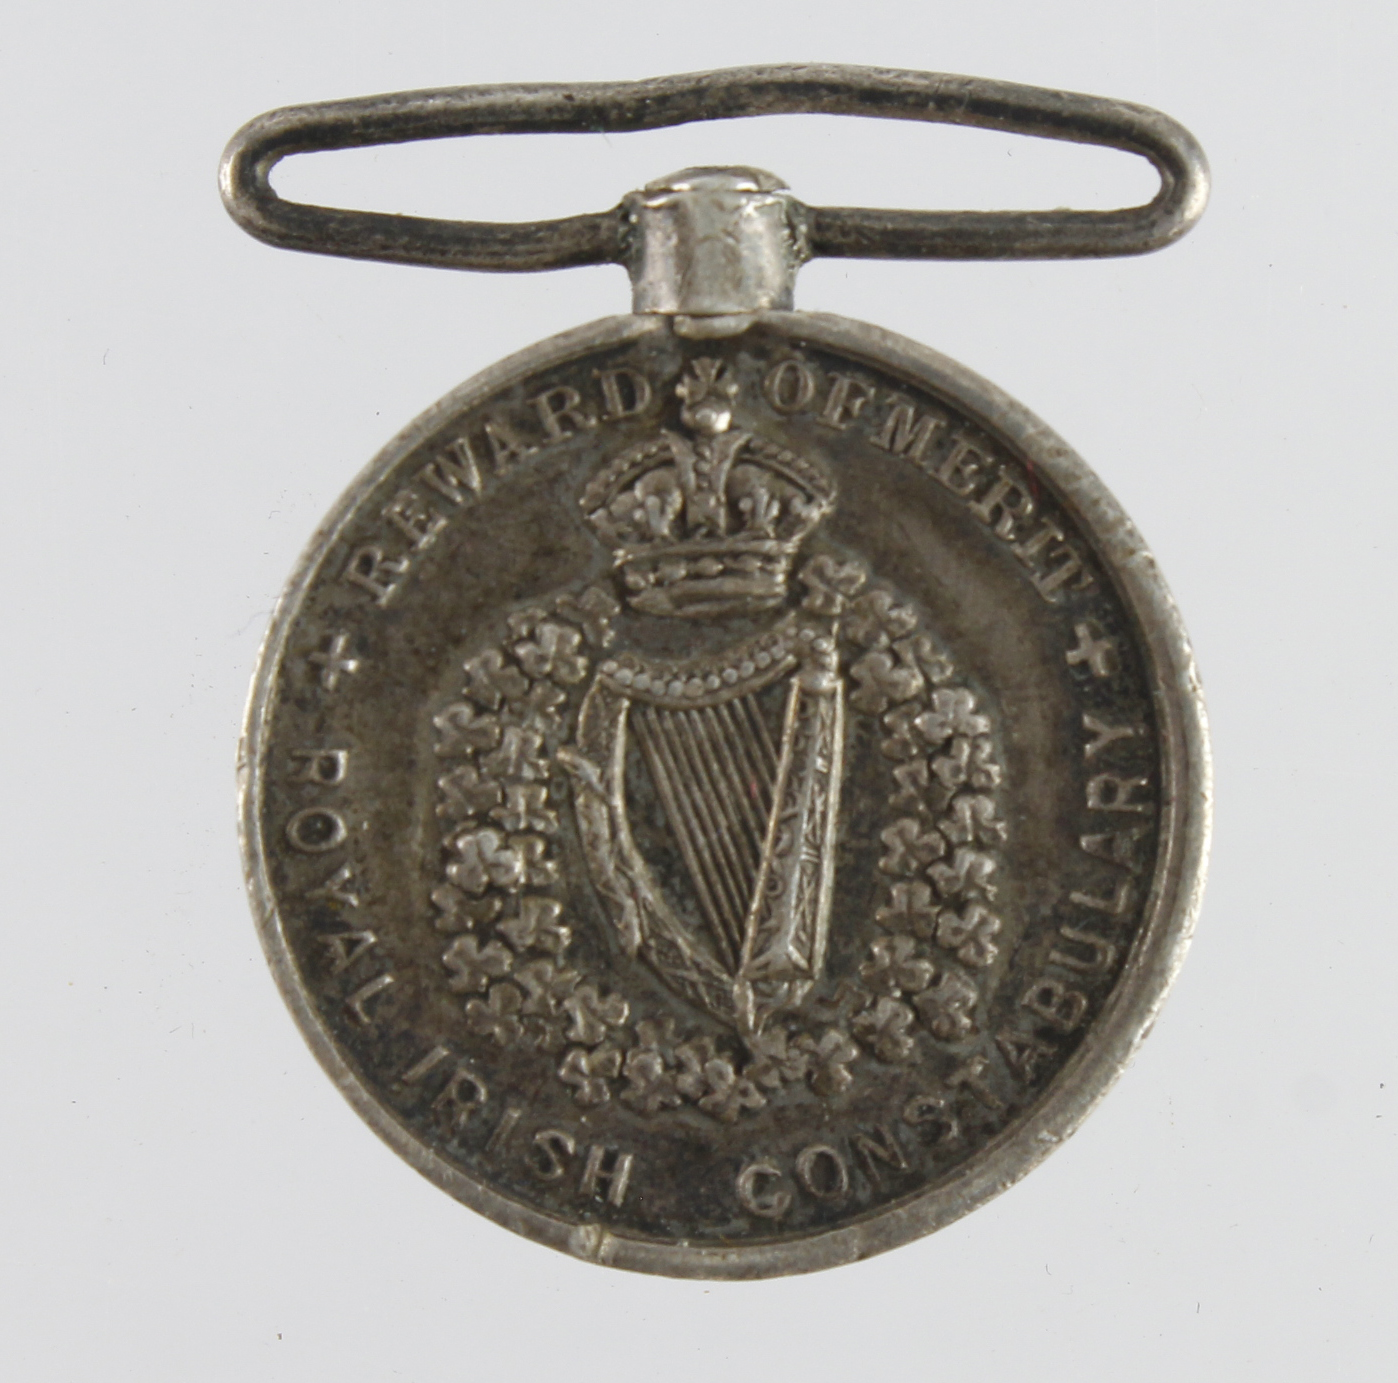 Minature Medal - Royal Irish Constabulary Reward of Merit medal